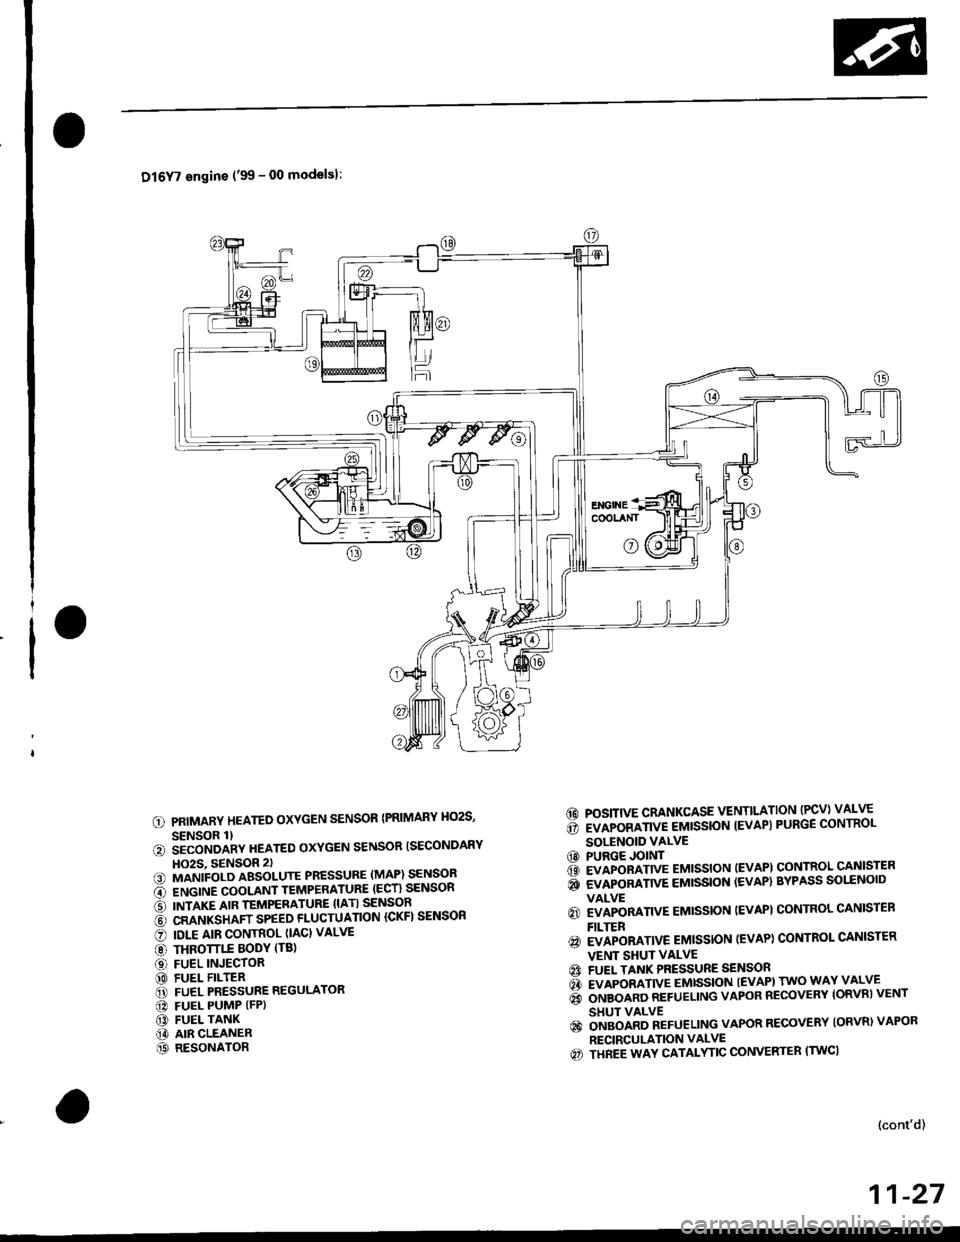 HONDA CIVIC 1999 6.G Owners Guide Dl6Y7 engins (99 - 00 modelsl:
PRIMARY HEATED OXYGEN SENSOR {PRIMARY HO2S,
SENSOR 1)iiconoanv neareo oxYGEN sENsoR ISECoNDARY
HO2S, 9ENSOR 2)MANIFOLD ABSOLUTE PRESSURE (MAP) SENSOR
ENGINE COOLANT TEM